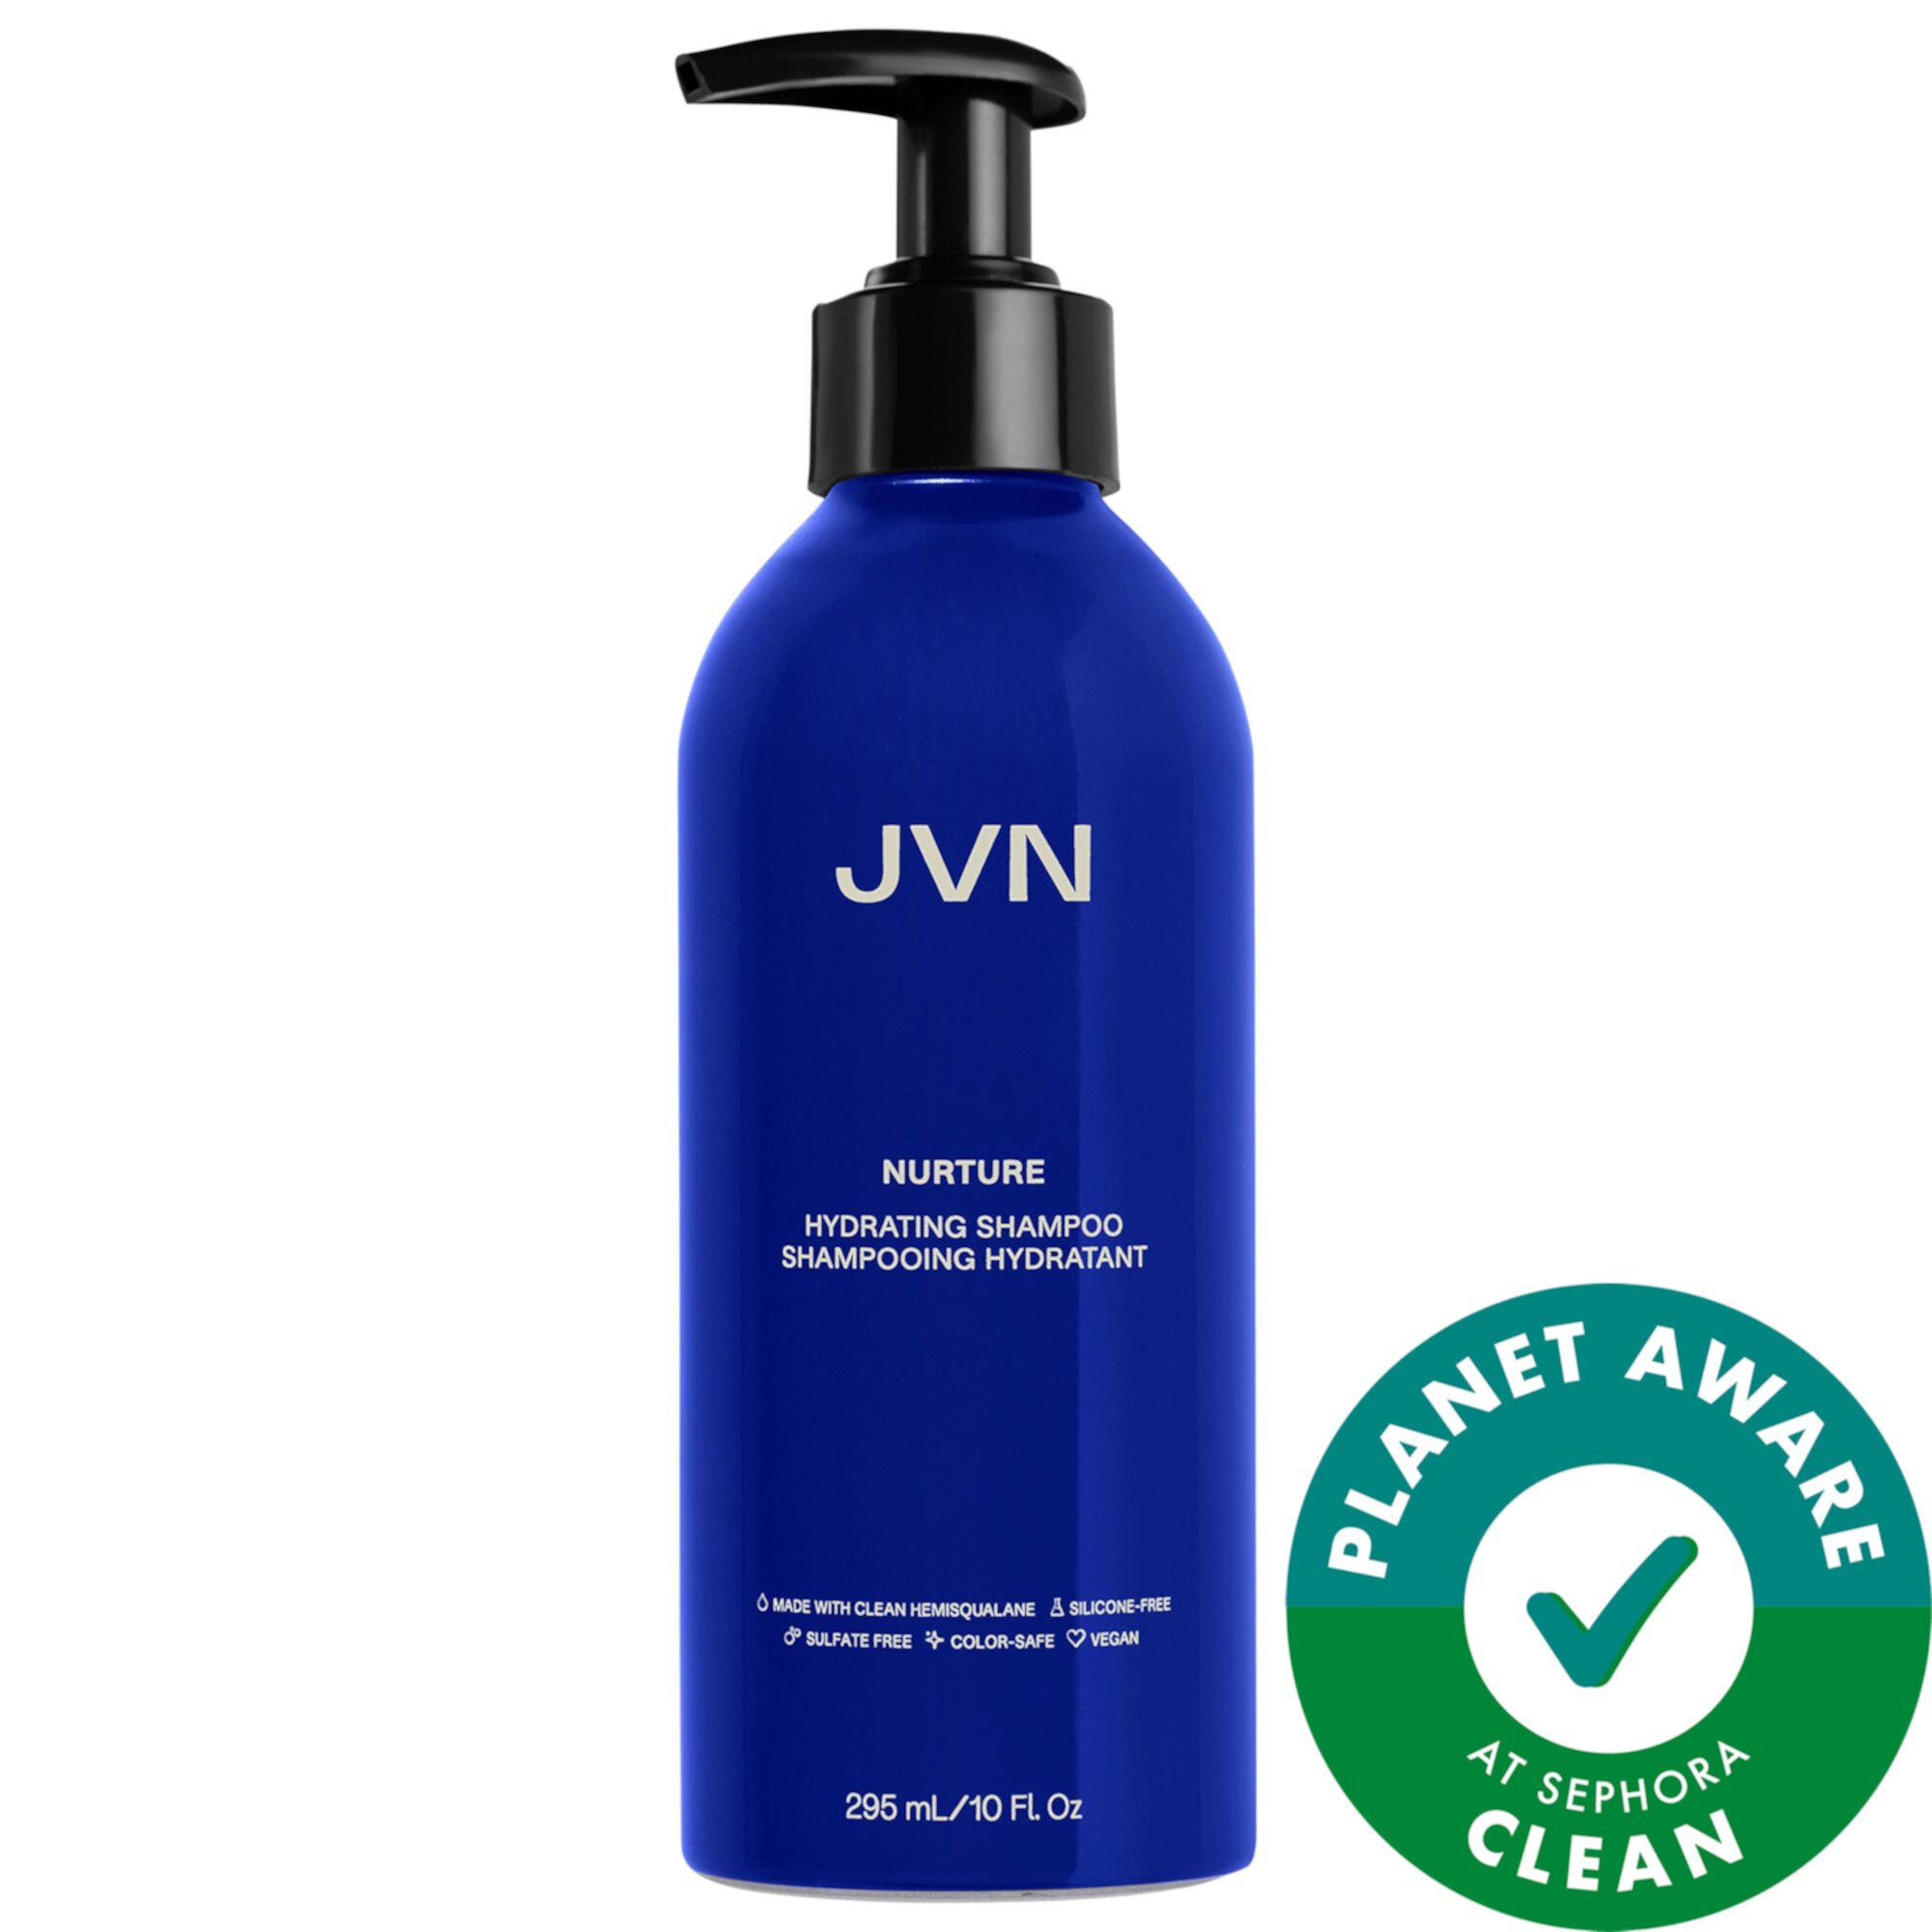 Увлажняющий шампунь Nurture для сухих волос JVN